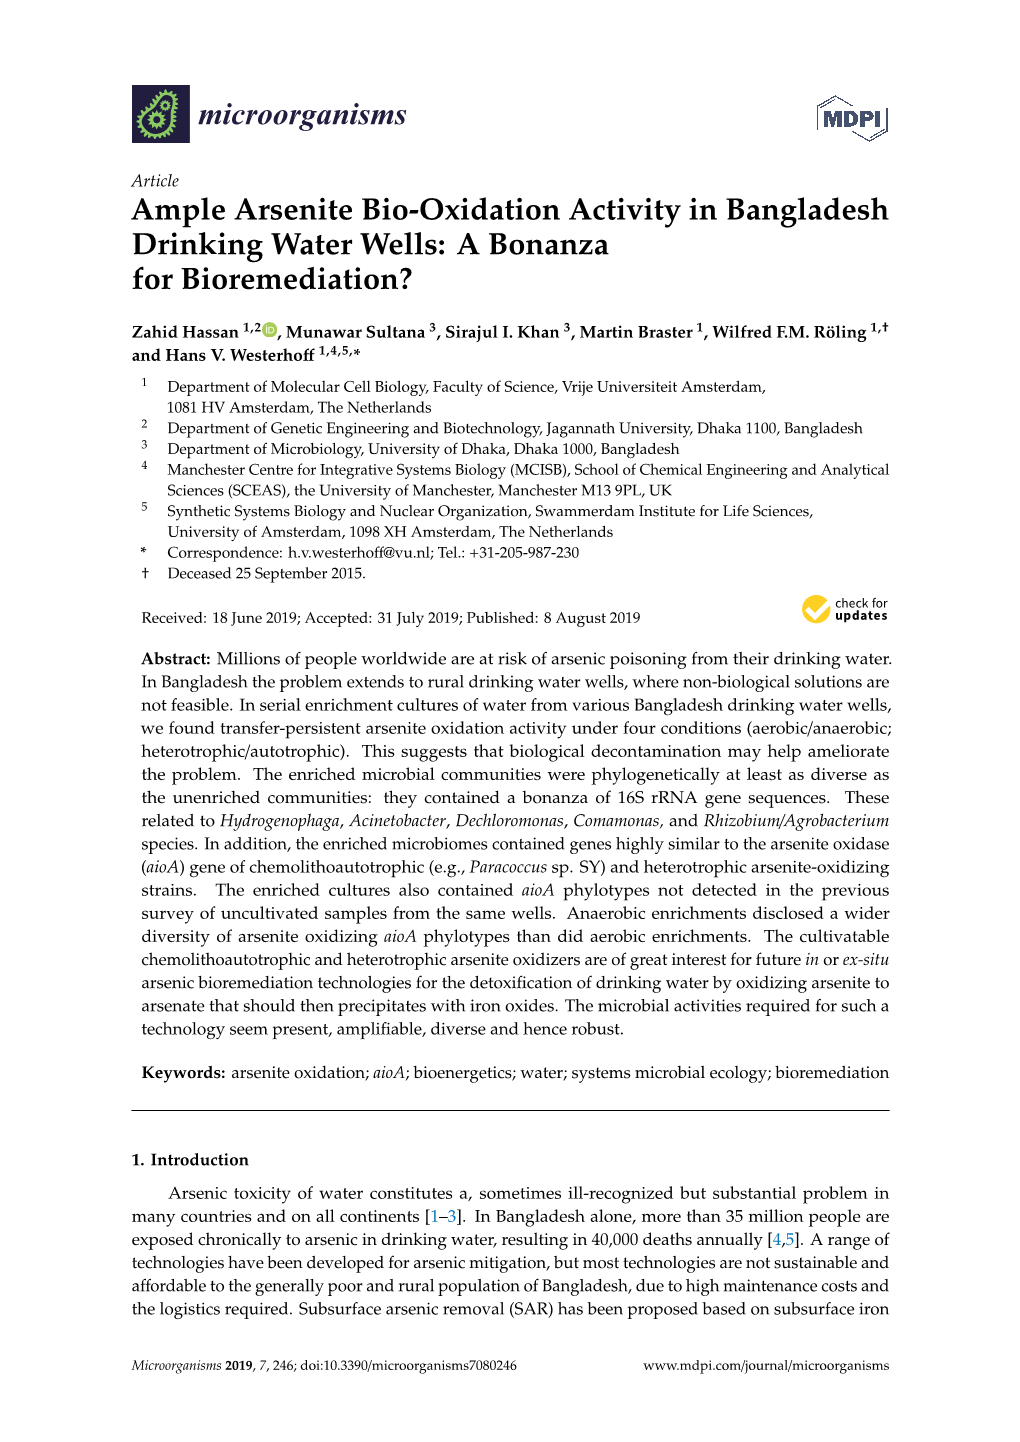 Ample Arsenite Bio-Oxidation Activity in Bangladesh Drinking Water Wells: a Bonanza for Bioremediation?